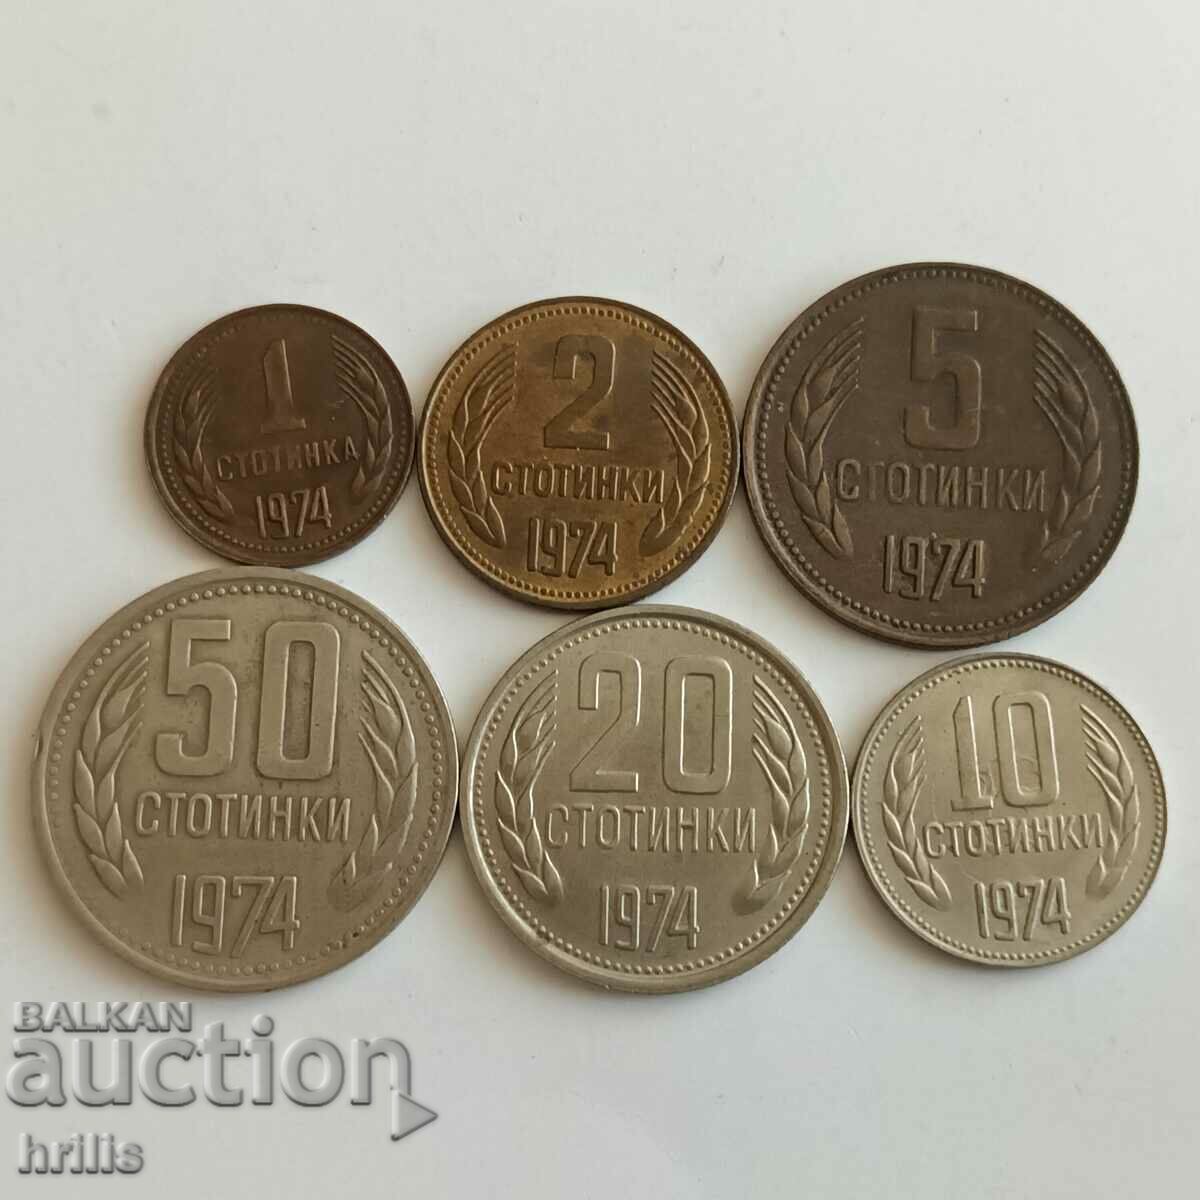 BULGARIA 1974 - 1, 2, 5, 10, 20, 50 CENTS SET OF 6